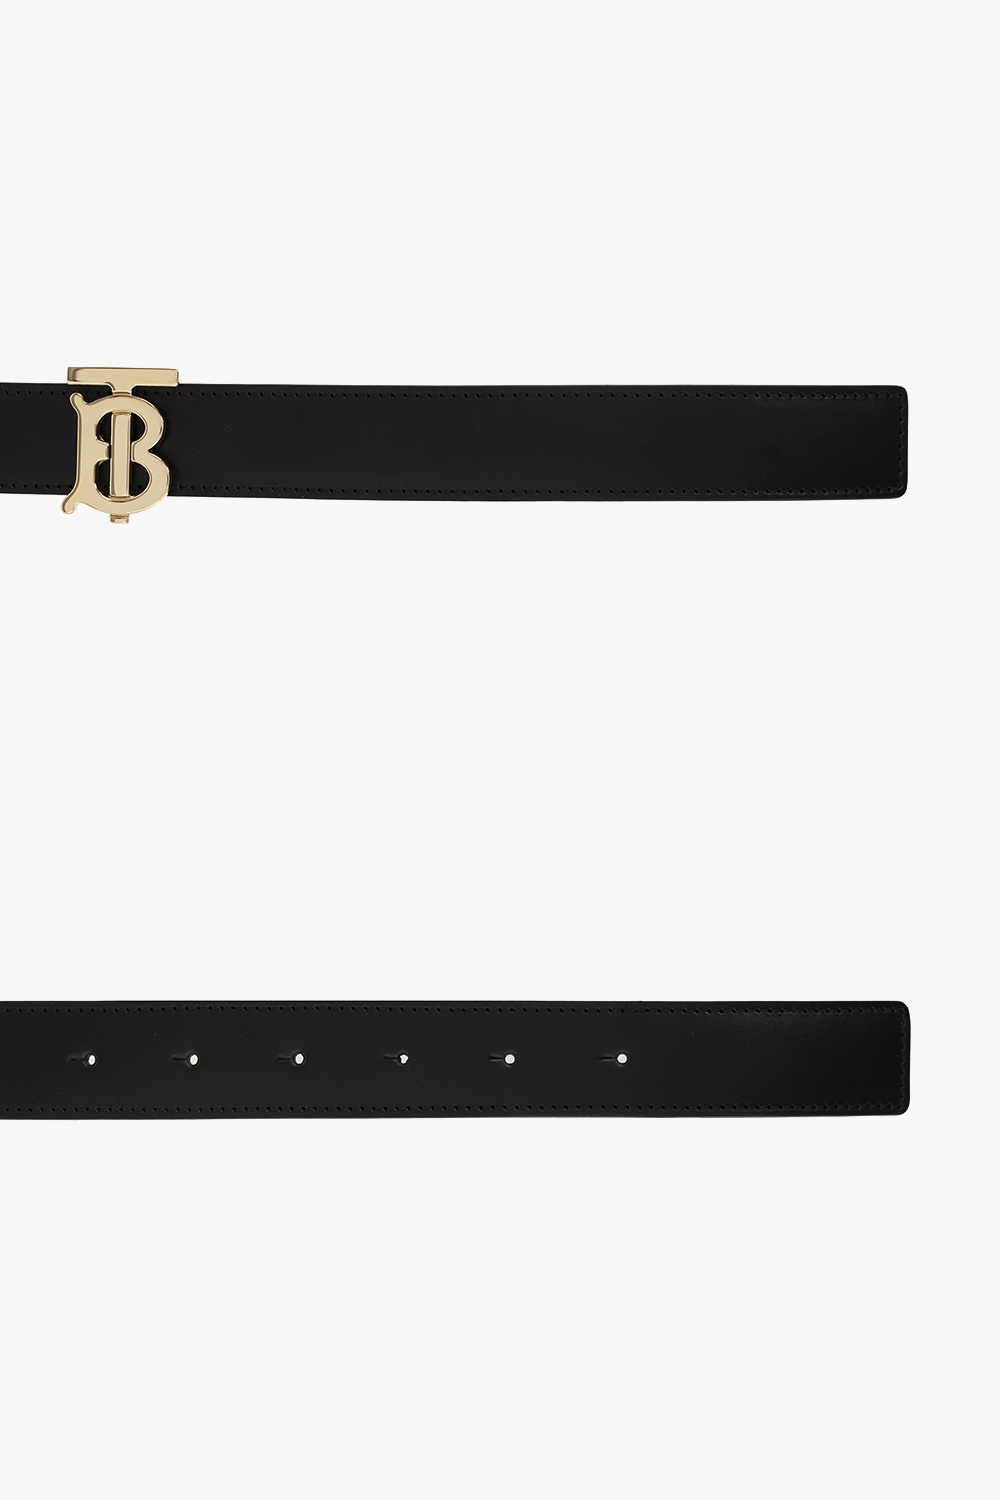 Burberry reversible check monogram belt neutrals